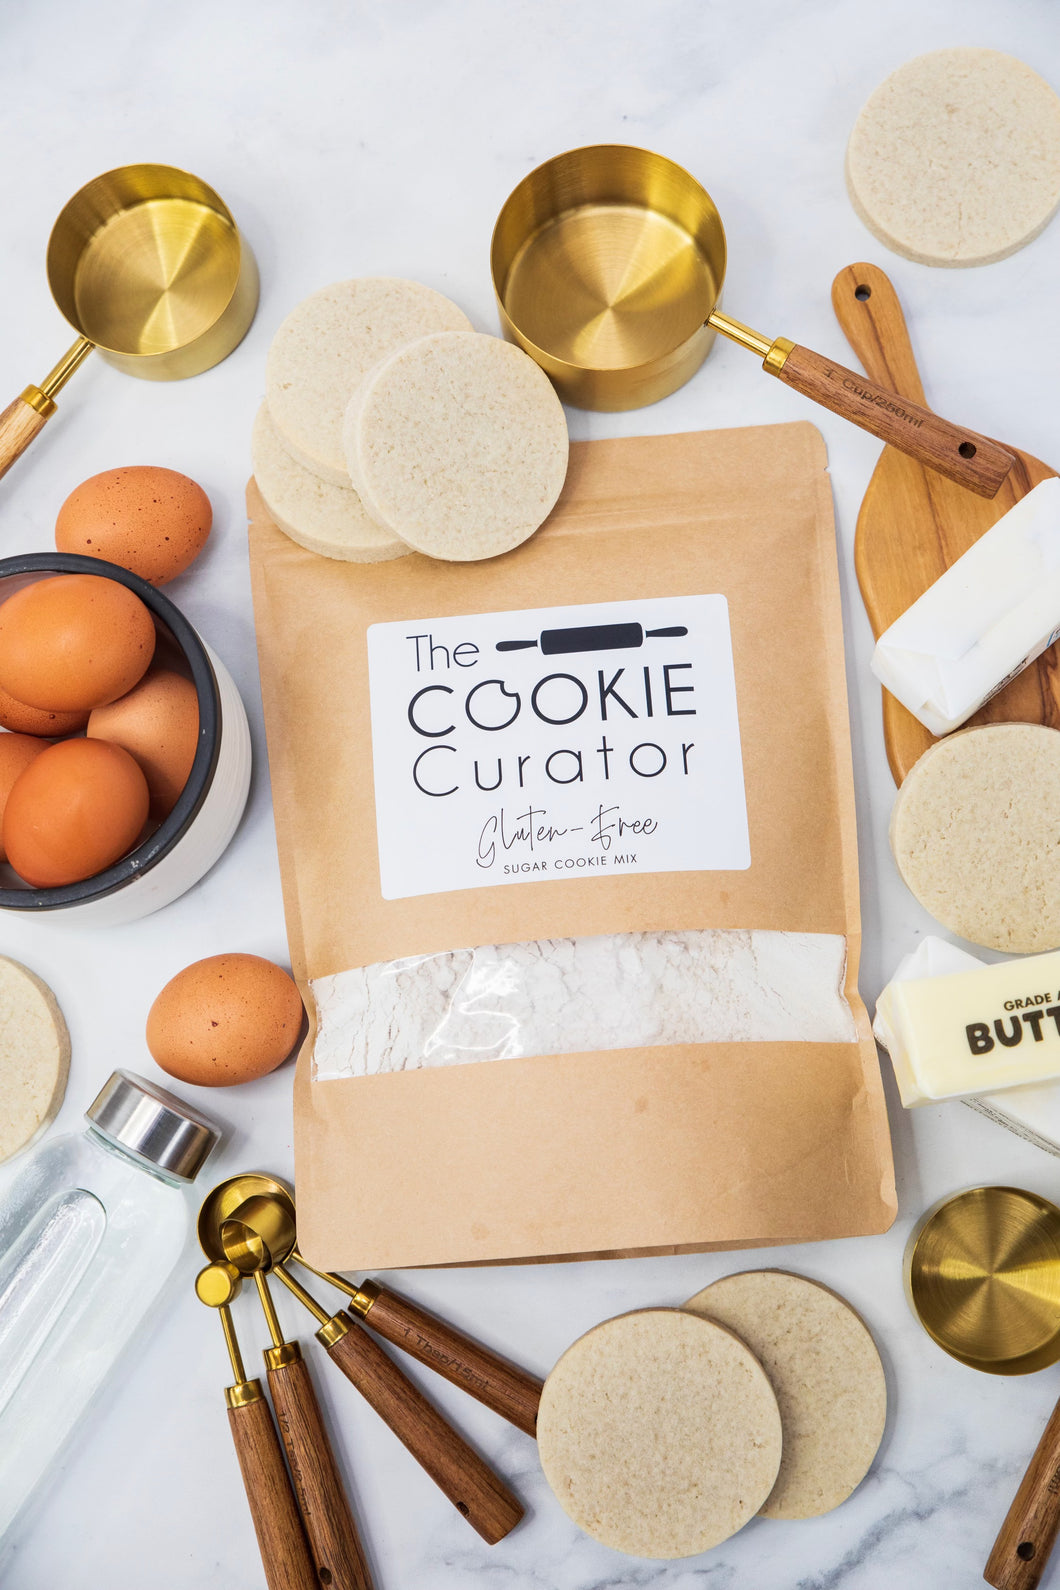 Cookie Curator Sugar Cookie Mix (Gluten-Free)